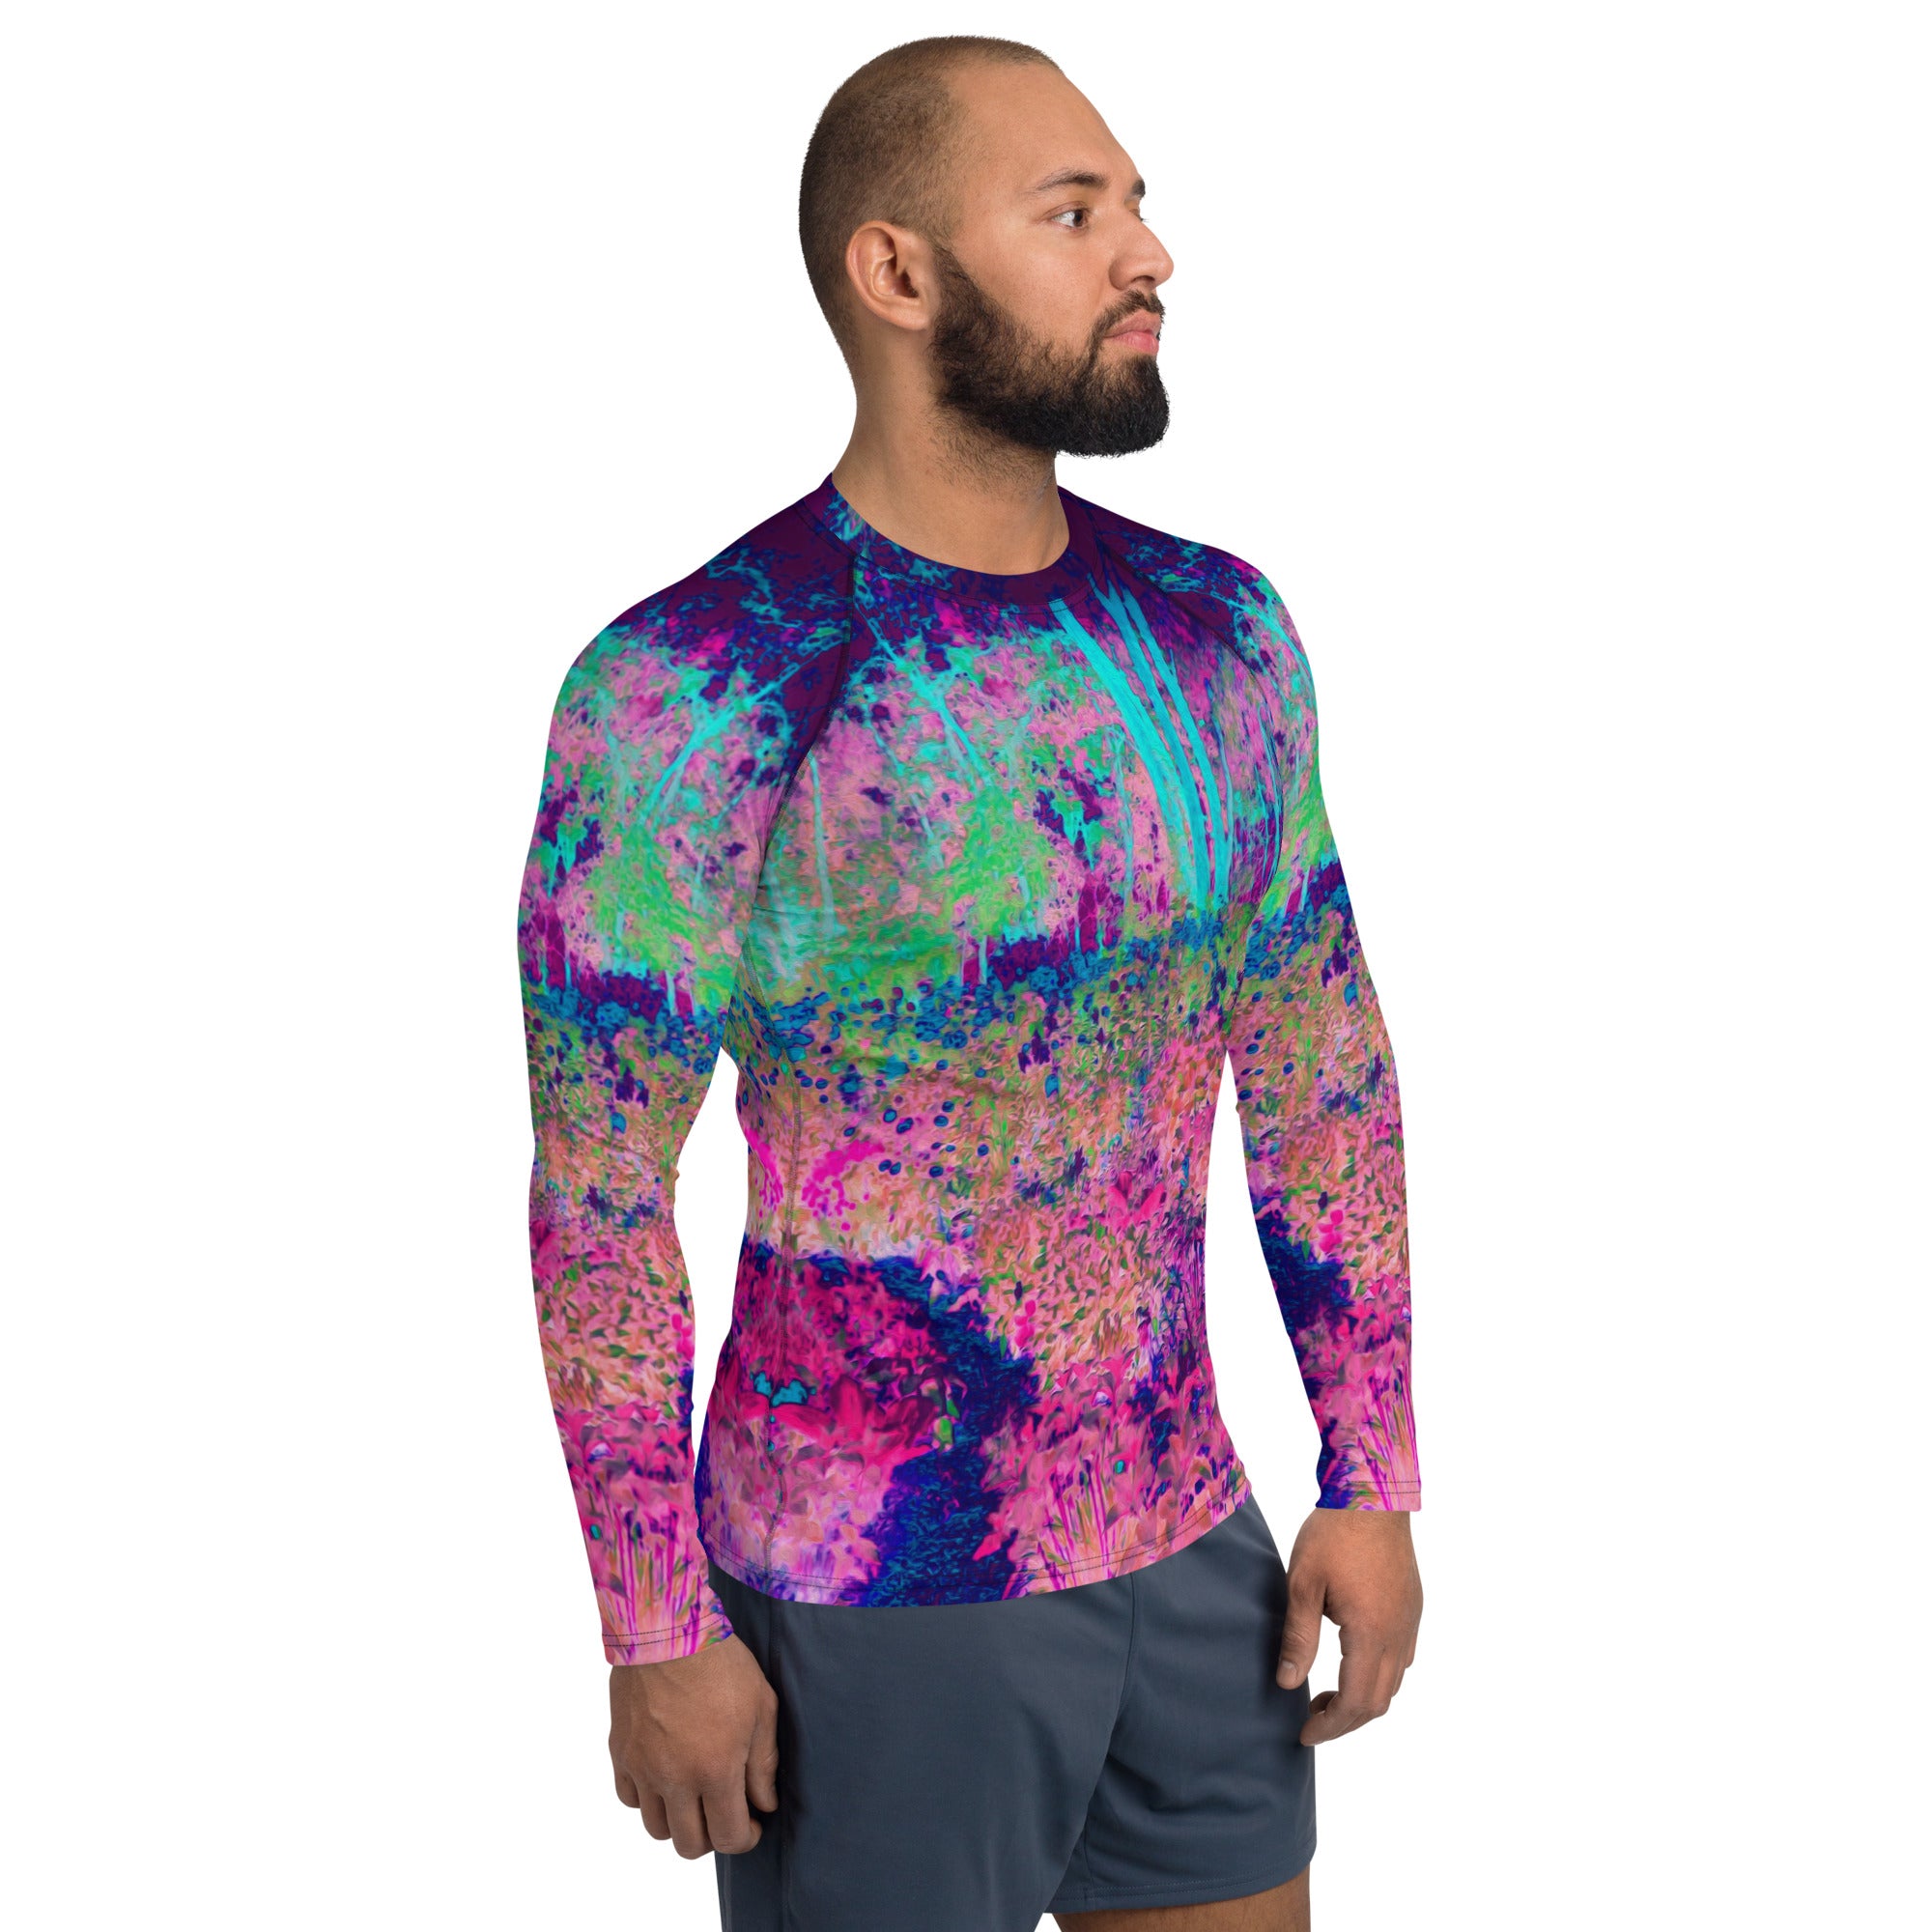 Men's Athletic Rash Guard Shirts - Impressionistic Purple and Hot Pink Garden Landscape